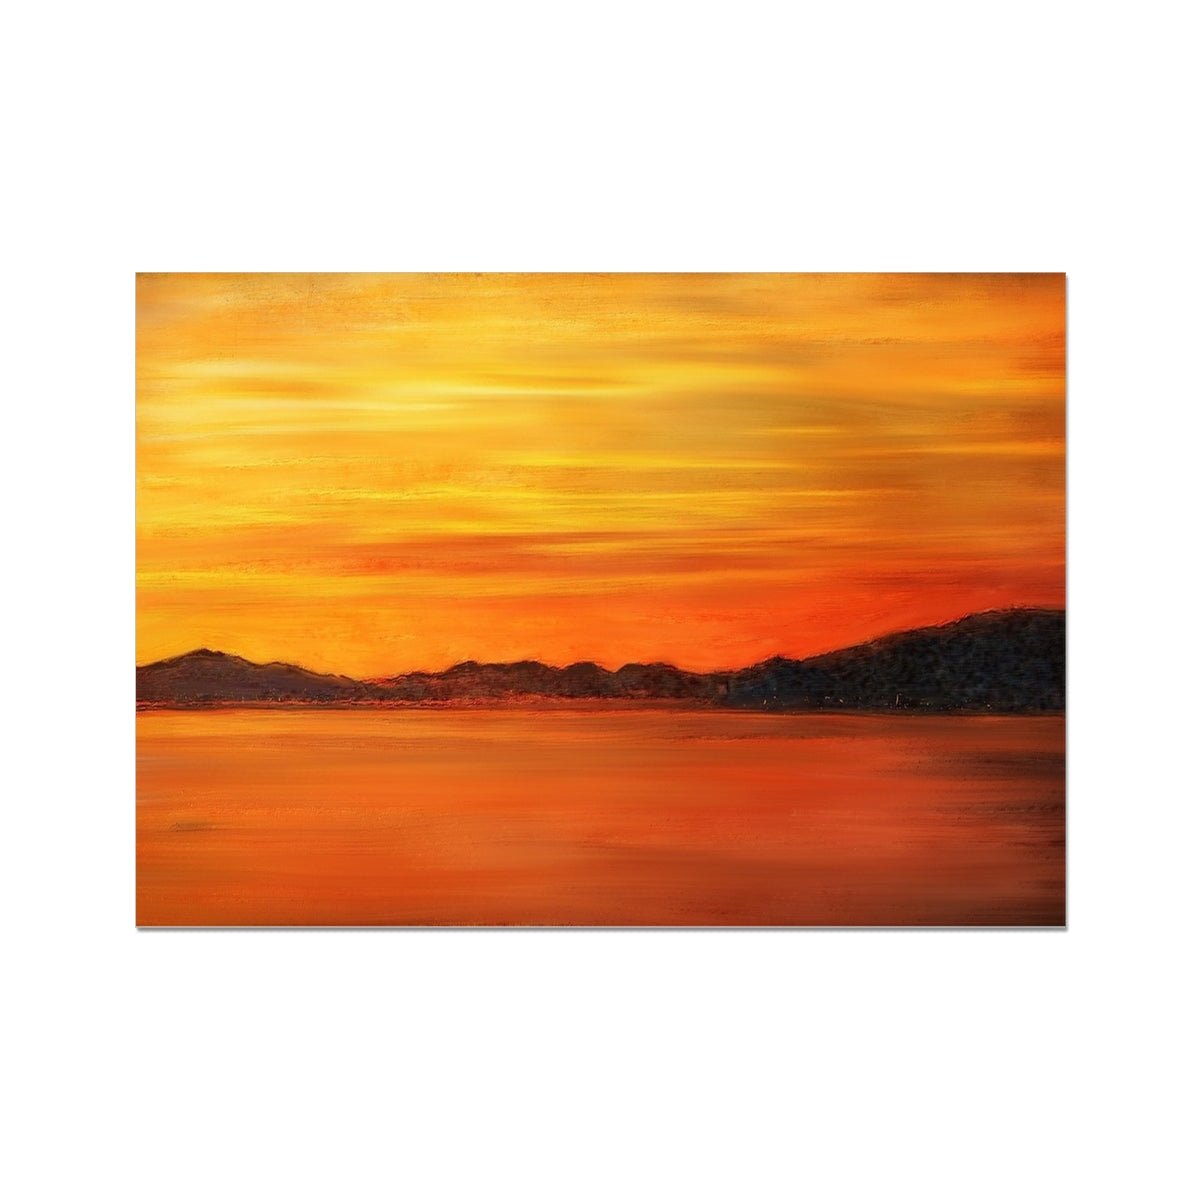 Loch Fyne Sunset Painting | Fine Art Prints From Scotland-Unframed Prints-Scottish Lochs & Mountains Art Gallery-A2 Landscape-Paintings, Prints, Homeware, Art Gifts From Scotland By Scottish Artist Kevin Hunter